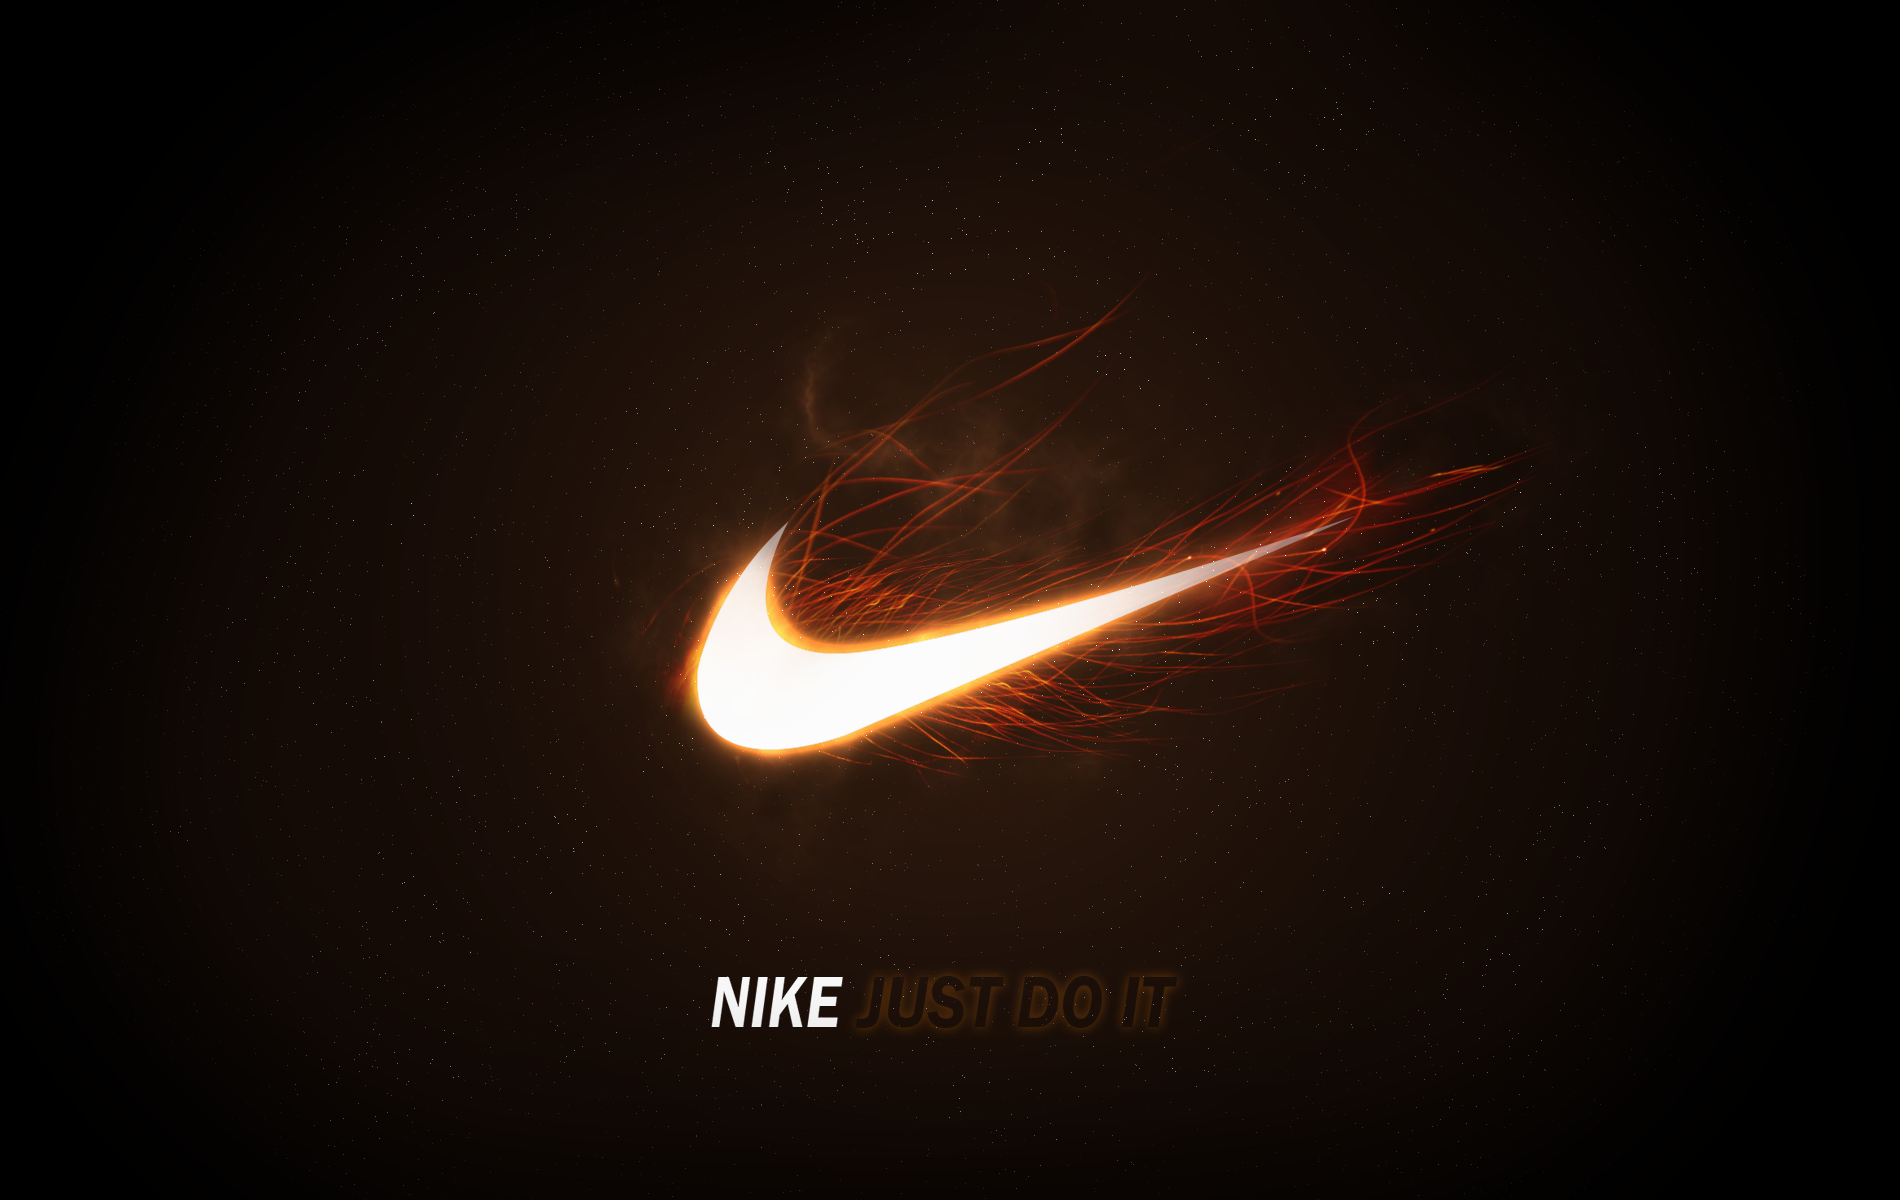 Nike Flame By Pvblivs